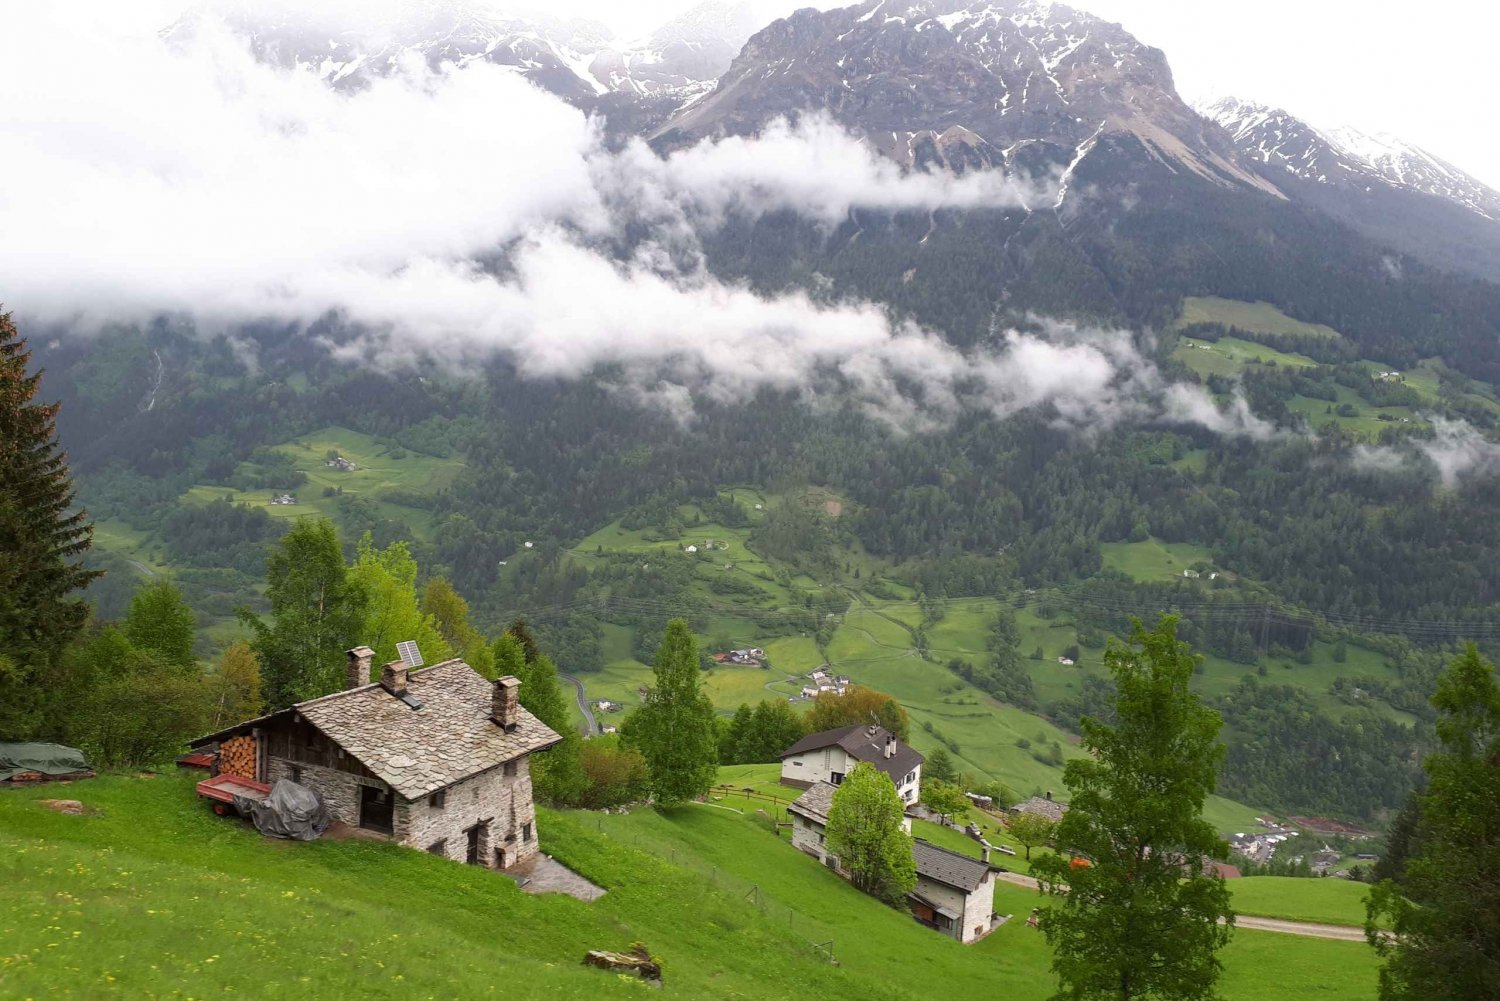 From Milan: Bernina Train, Swiss Alps & St. Moritz Day Trip